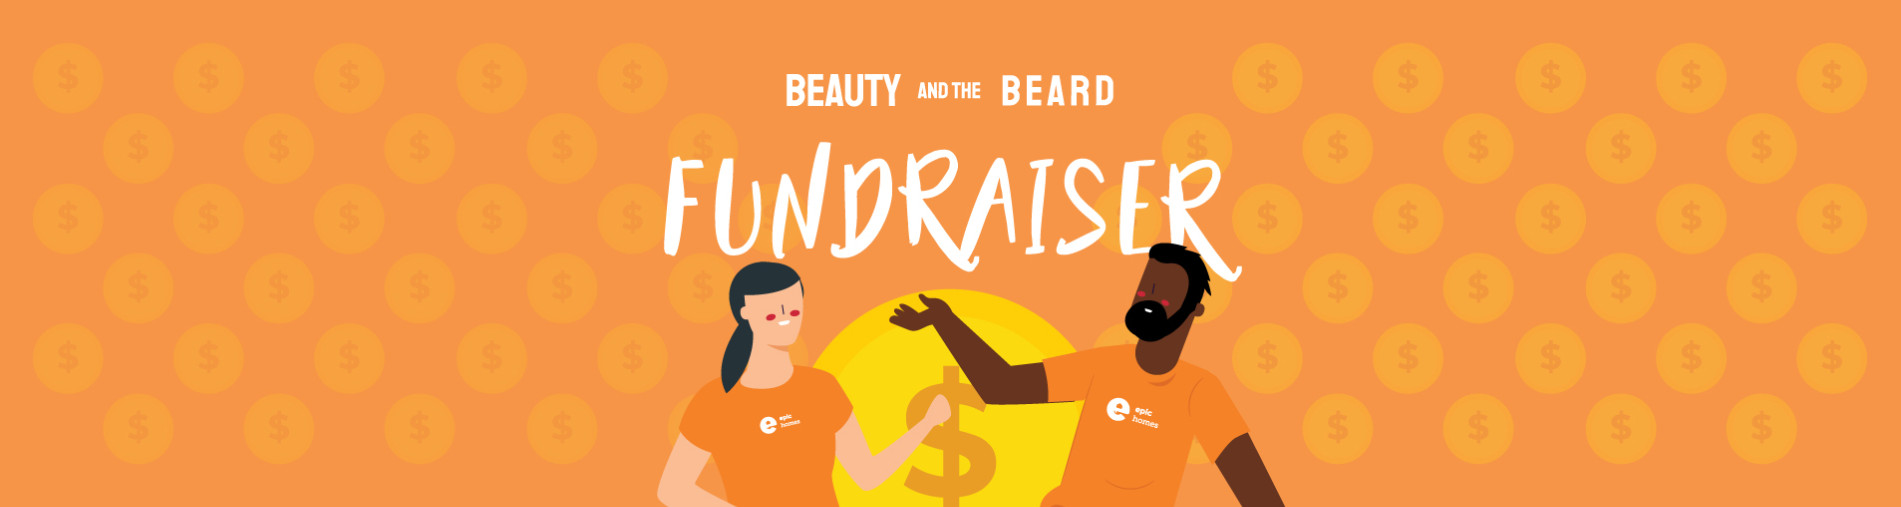 Beauty and The Beard Fundraiser Booster by Wei En